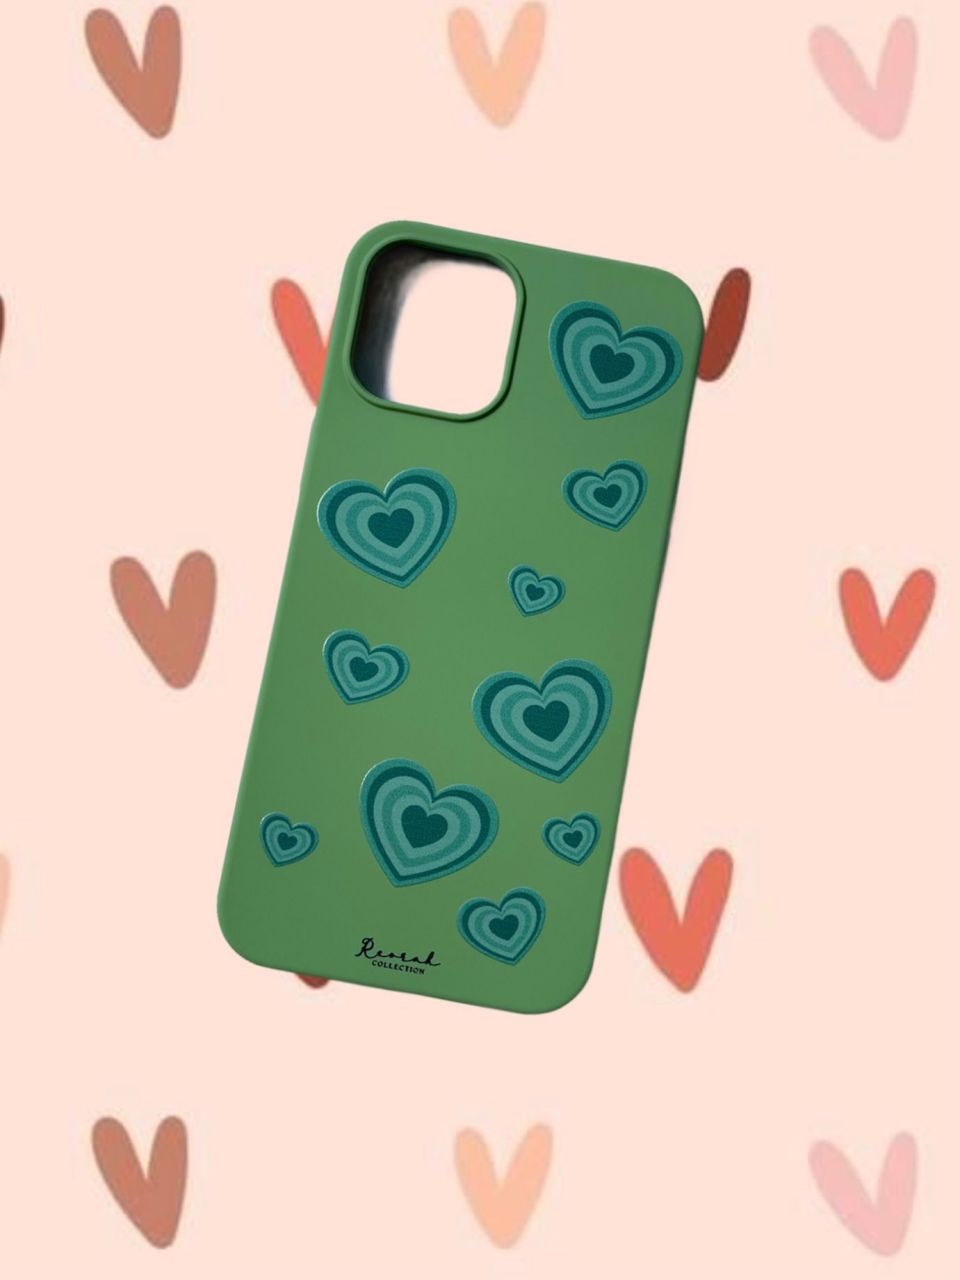 Green Heart Phone Case